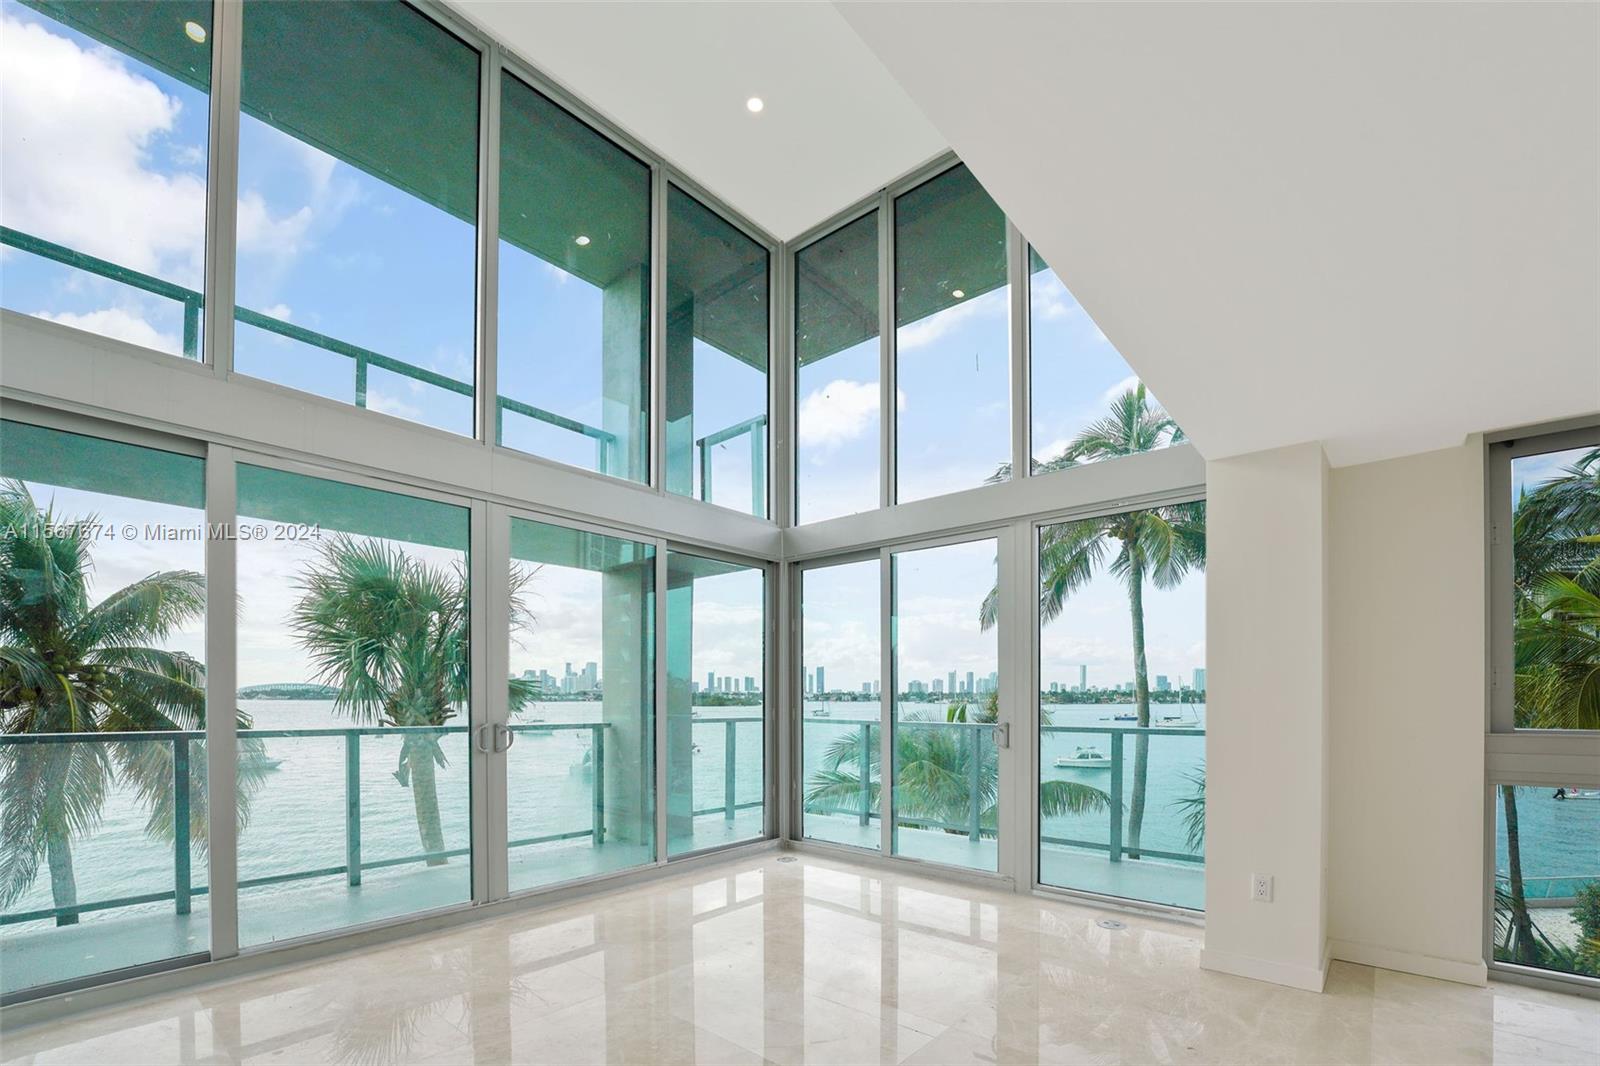 Rental Property at 1500 Bay Rd N-0315, Miami Beach, Miami-Dade County, Florida - Bedrooms: 3 
Bathrooms: 3  - $16,681 MO.